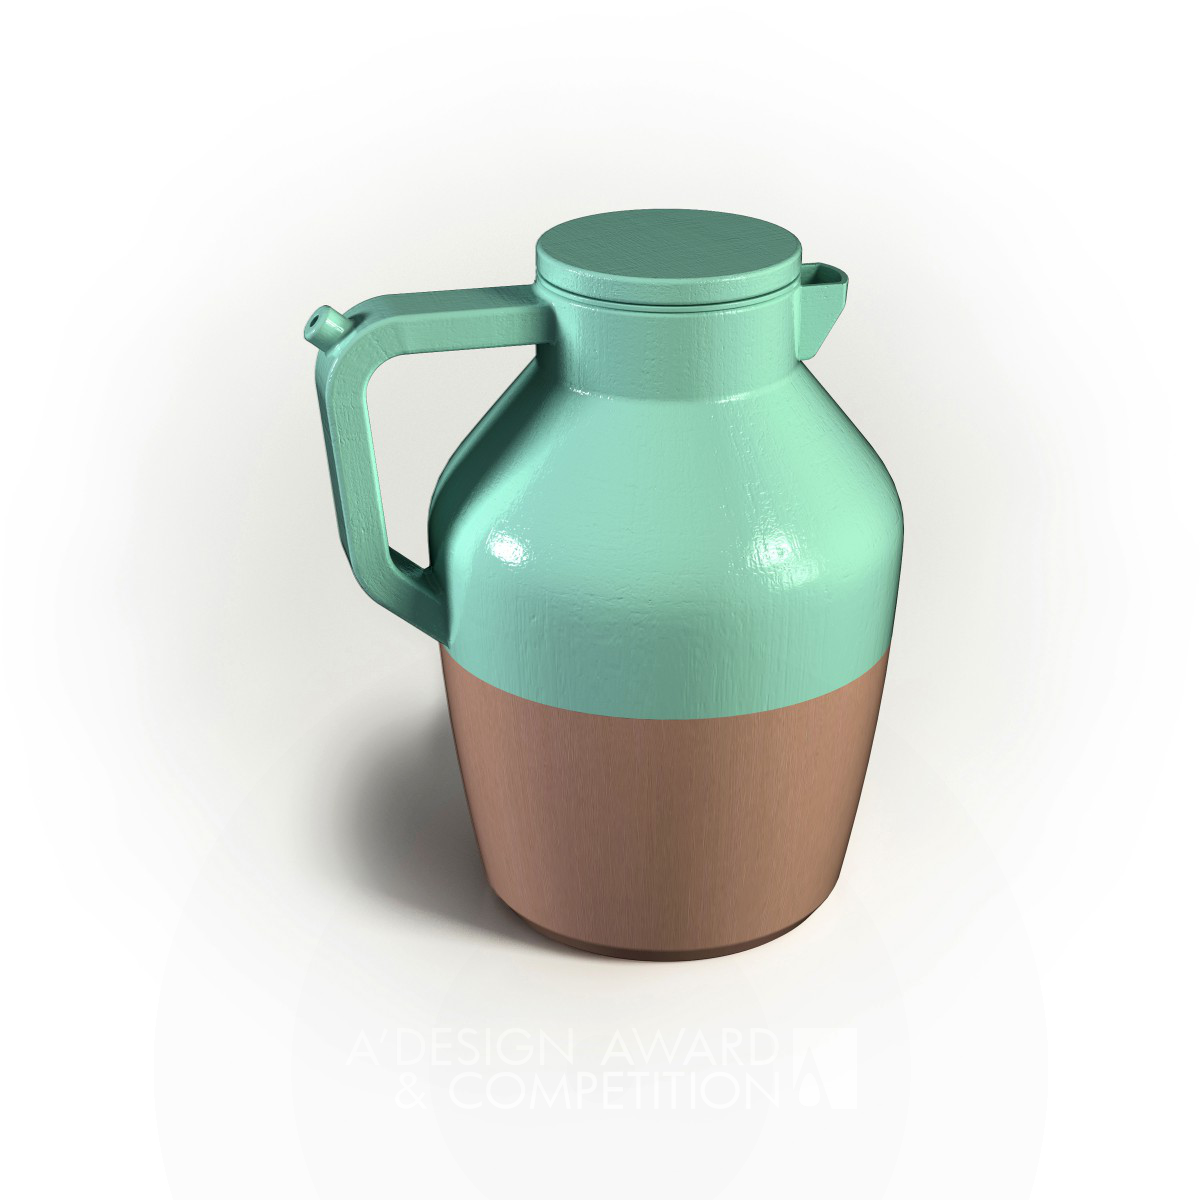 Balazs Toth water filter pitcher